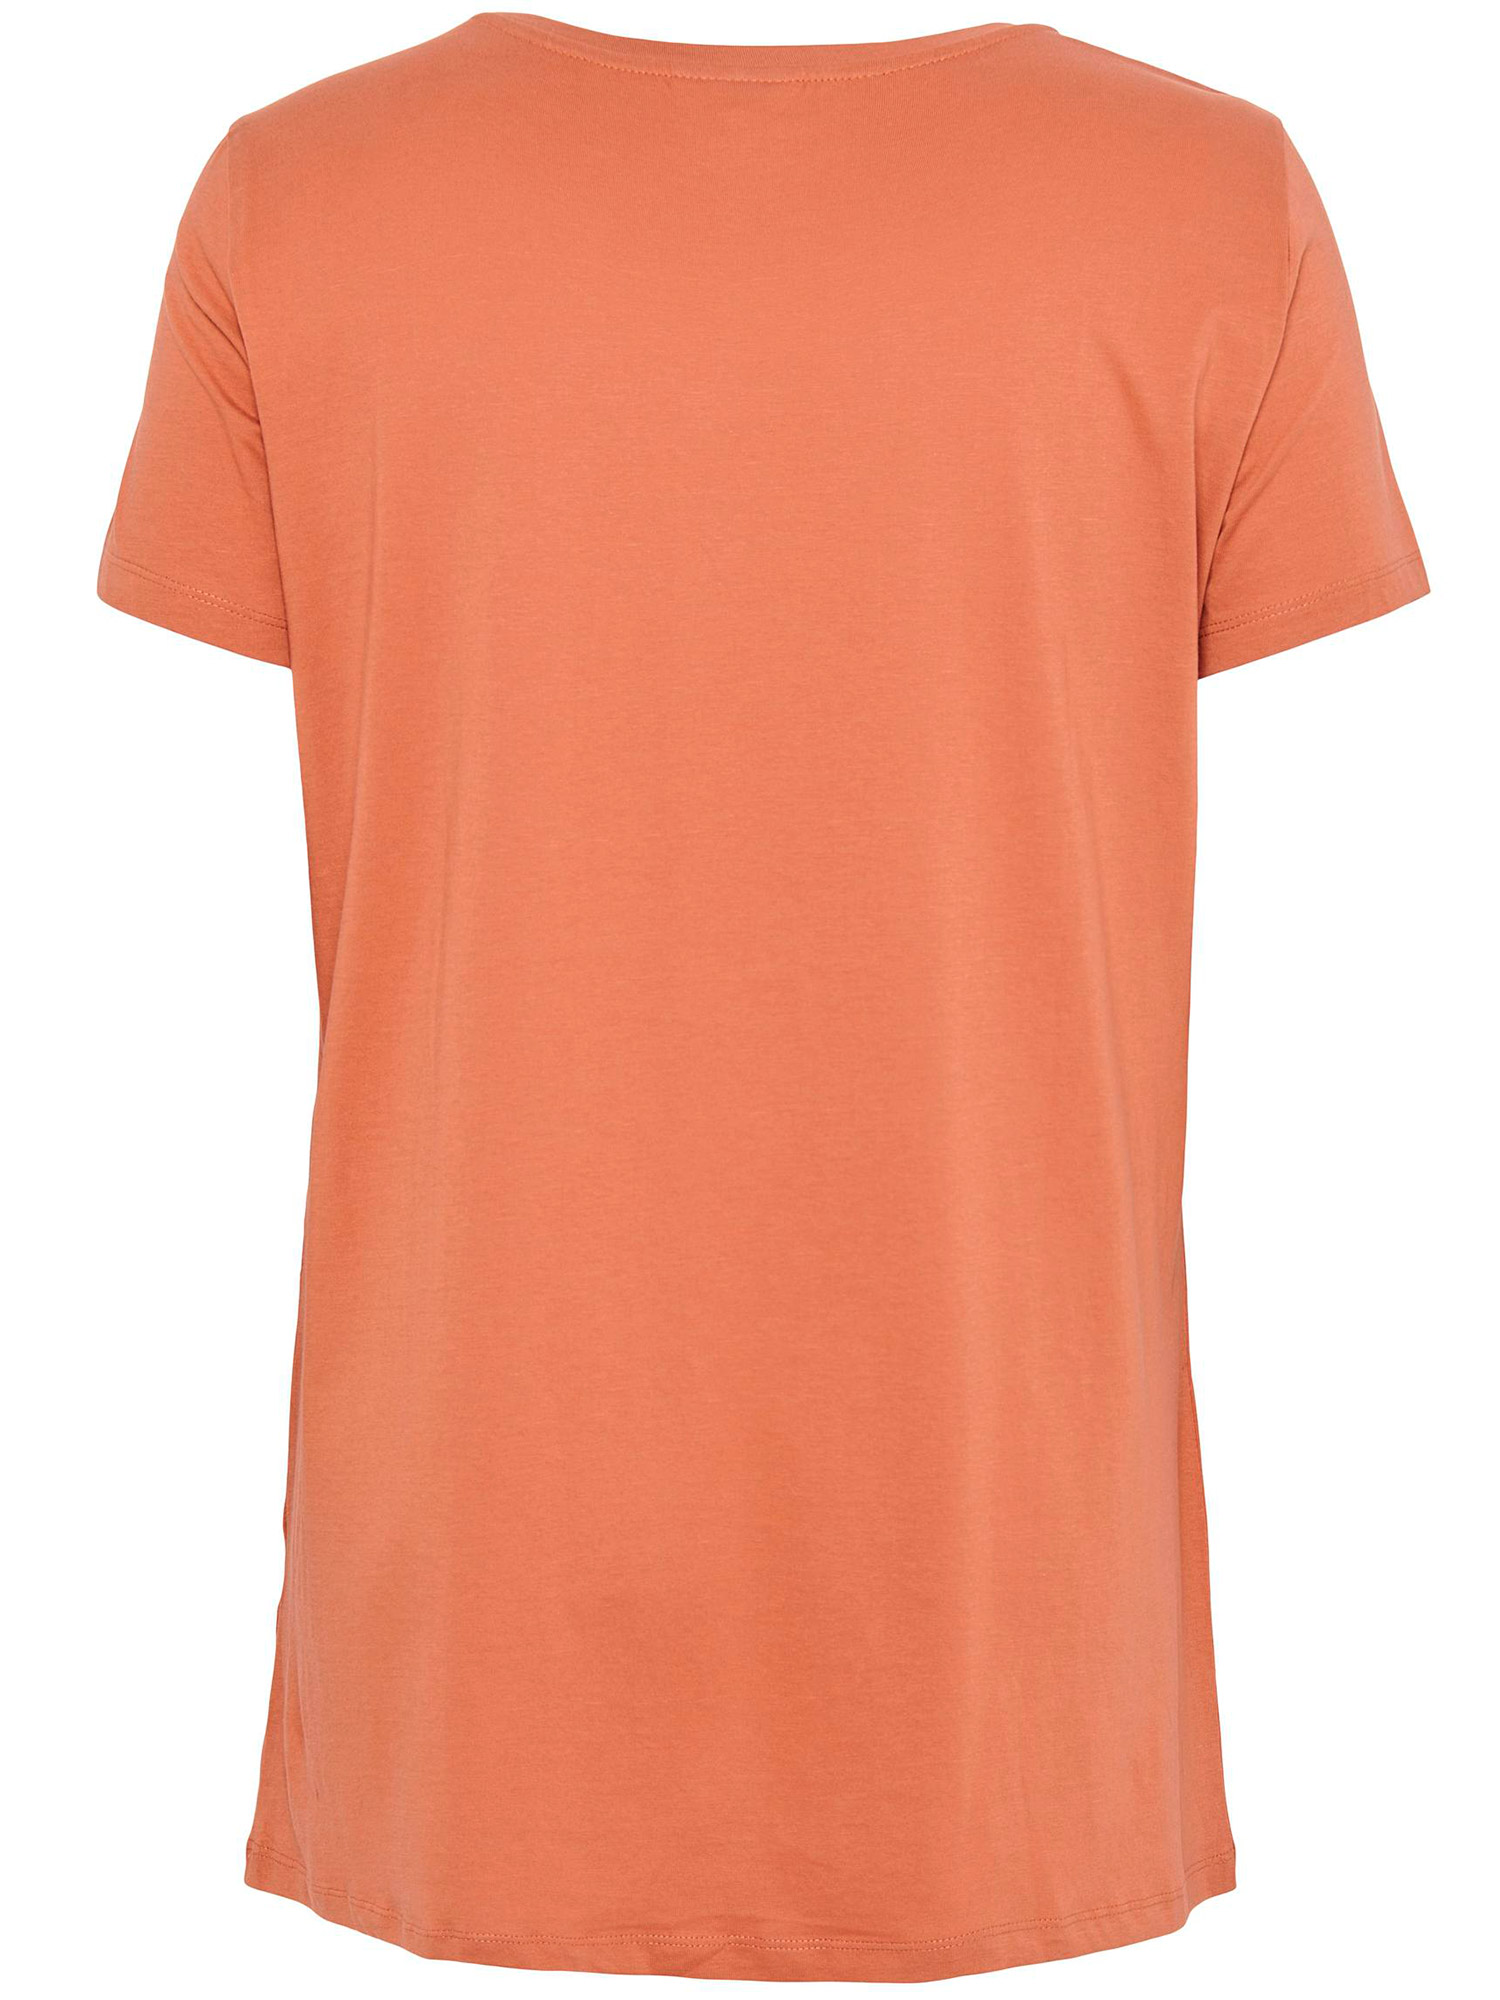 MOLLIE - Rödbrun bomullst-shirt med vitt tryck fra Only Carmakoma